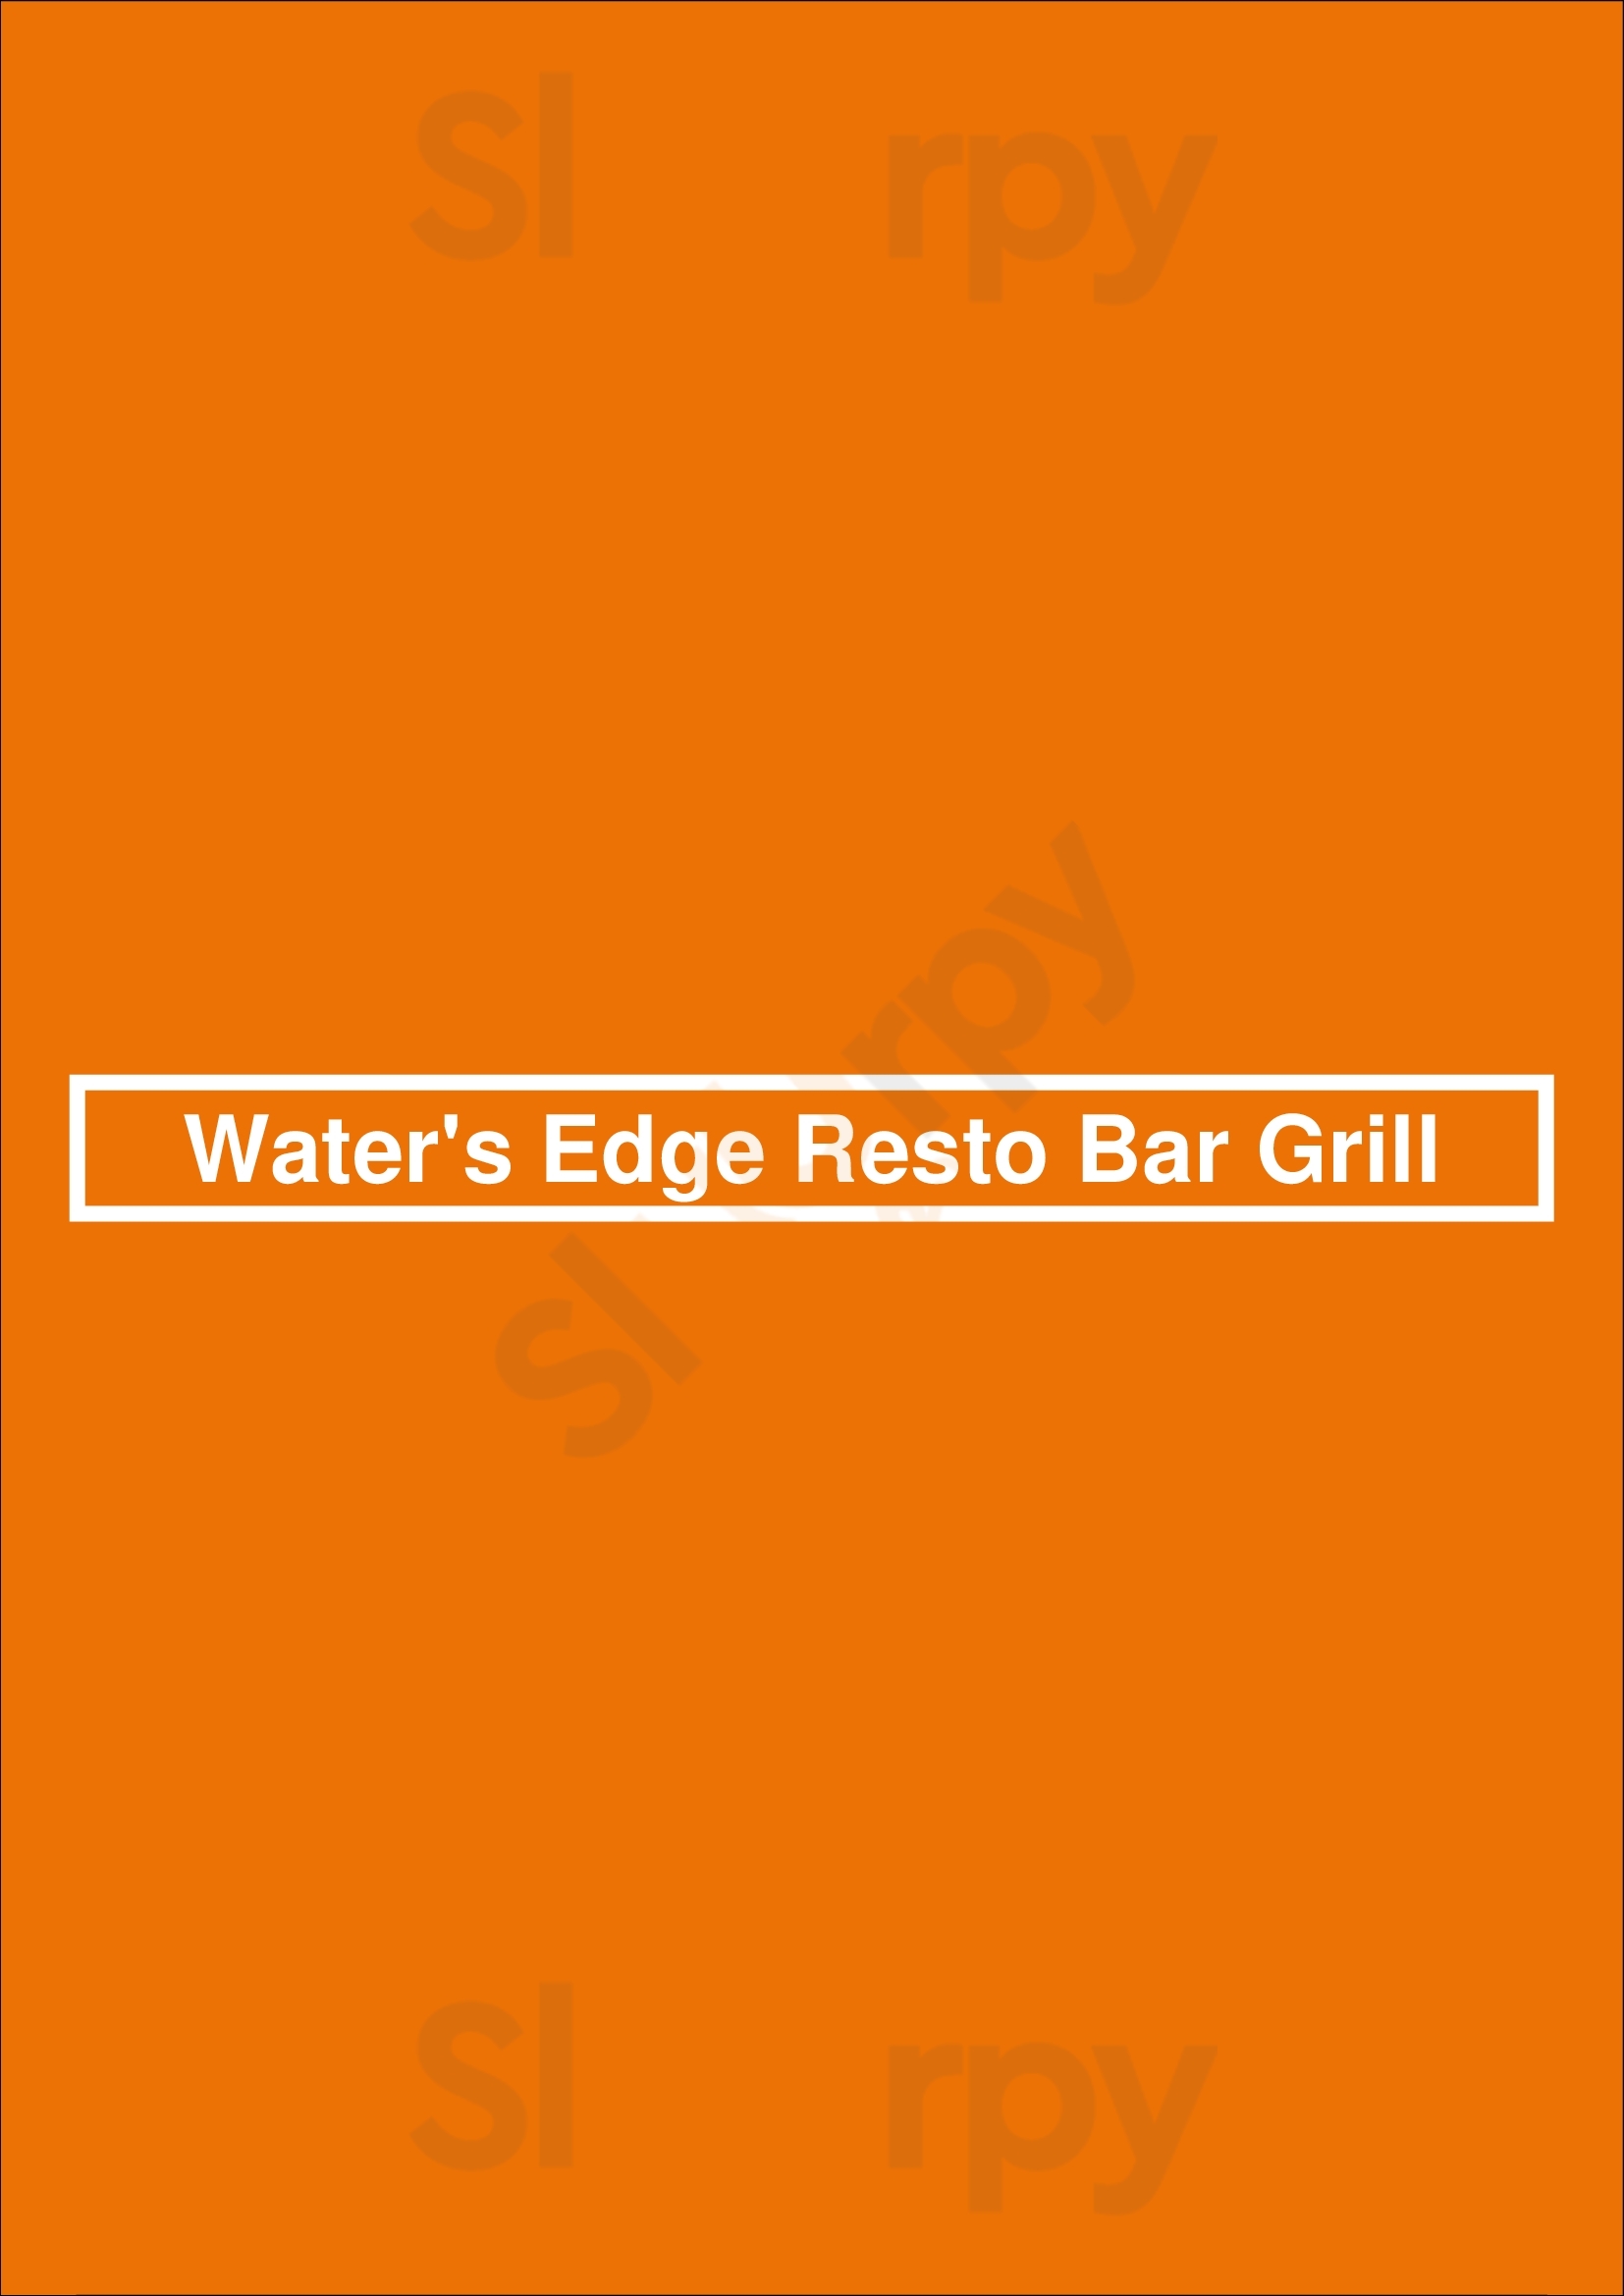 Water's Edge Resto Bar Grill Charlottetown Menu - 1